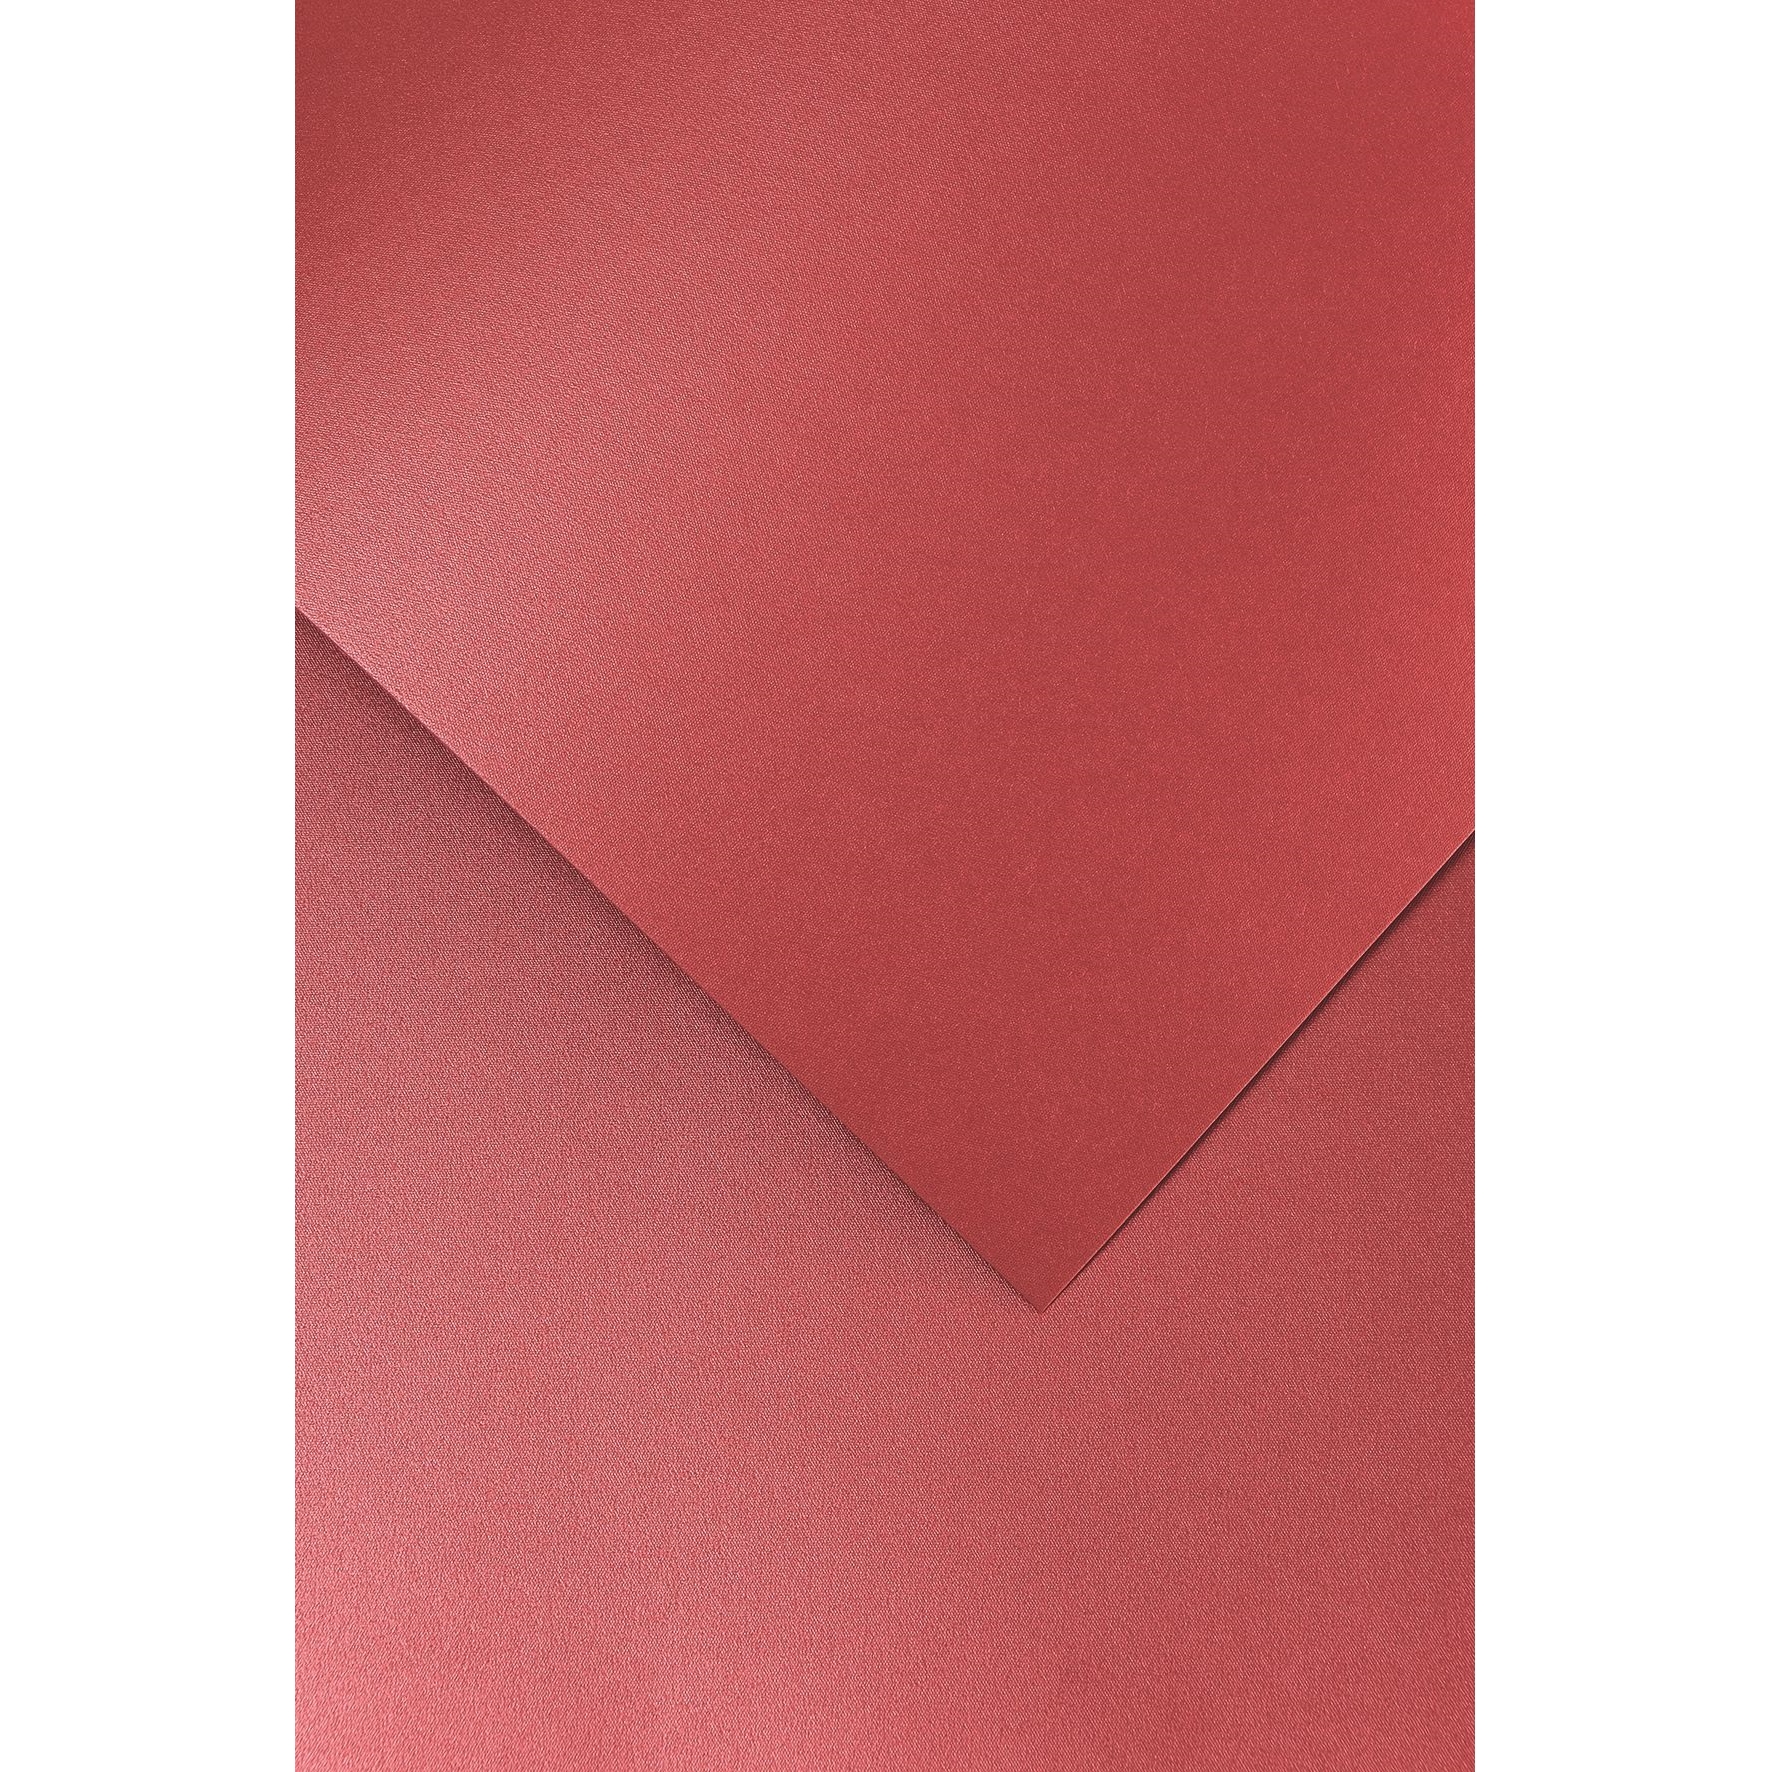 Ozdobný papír Iceland, červený, 220g, 20ks